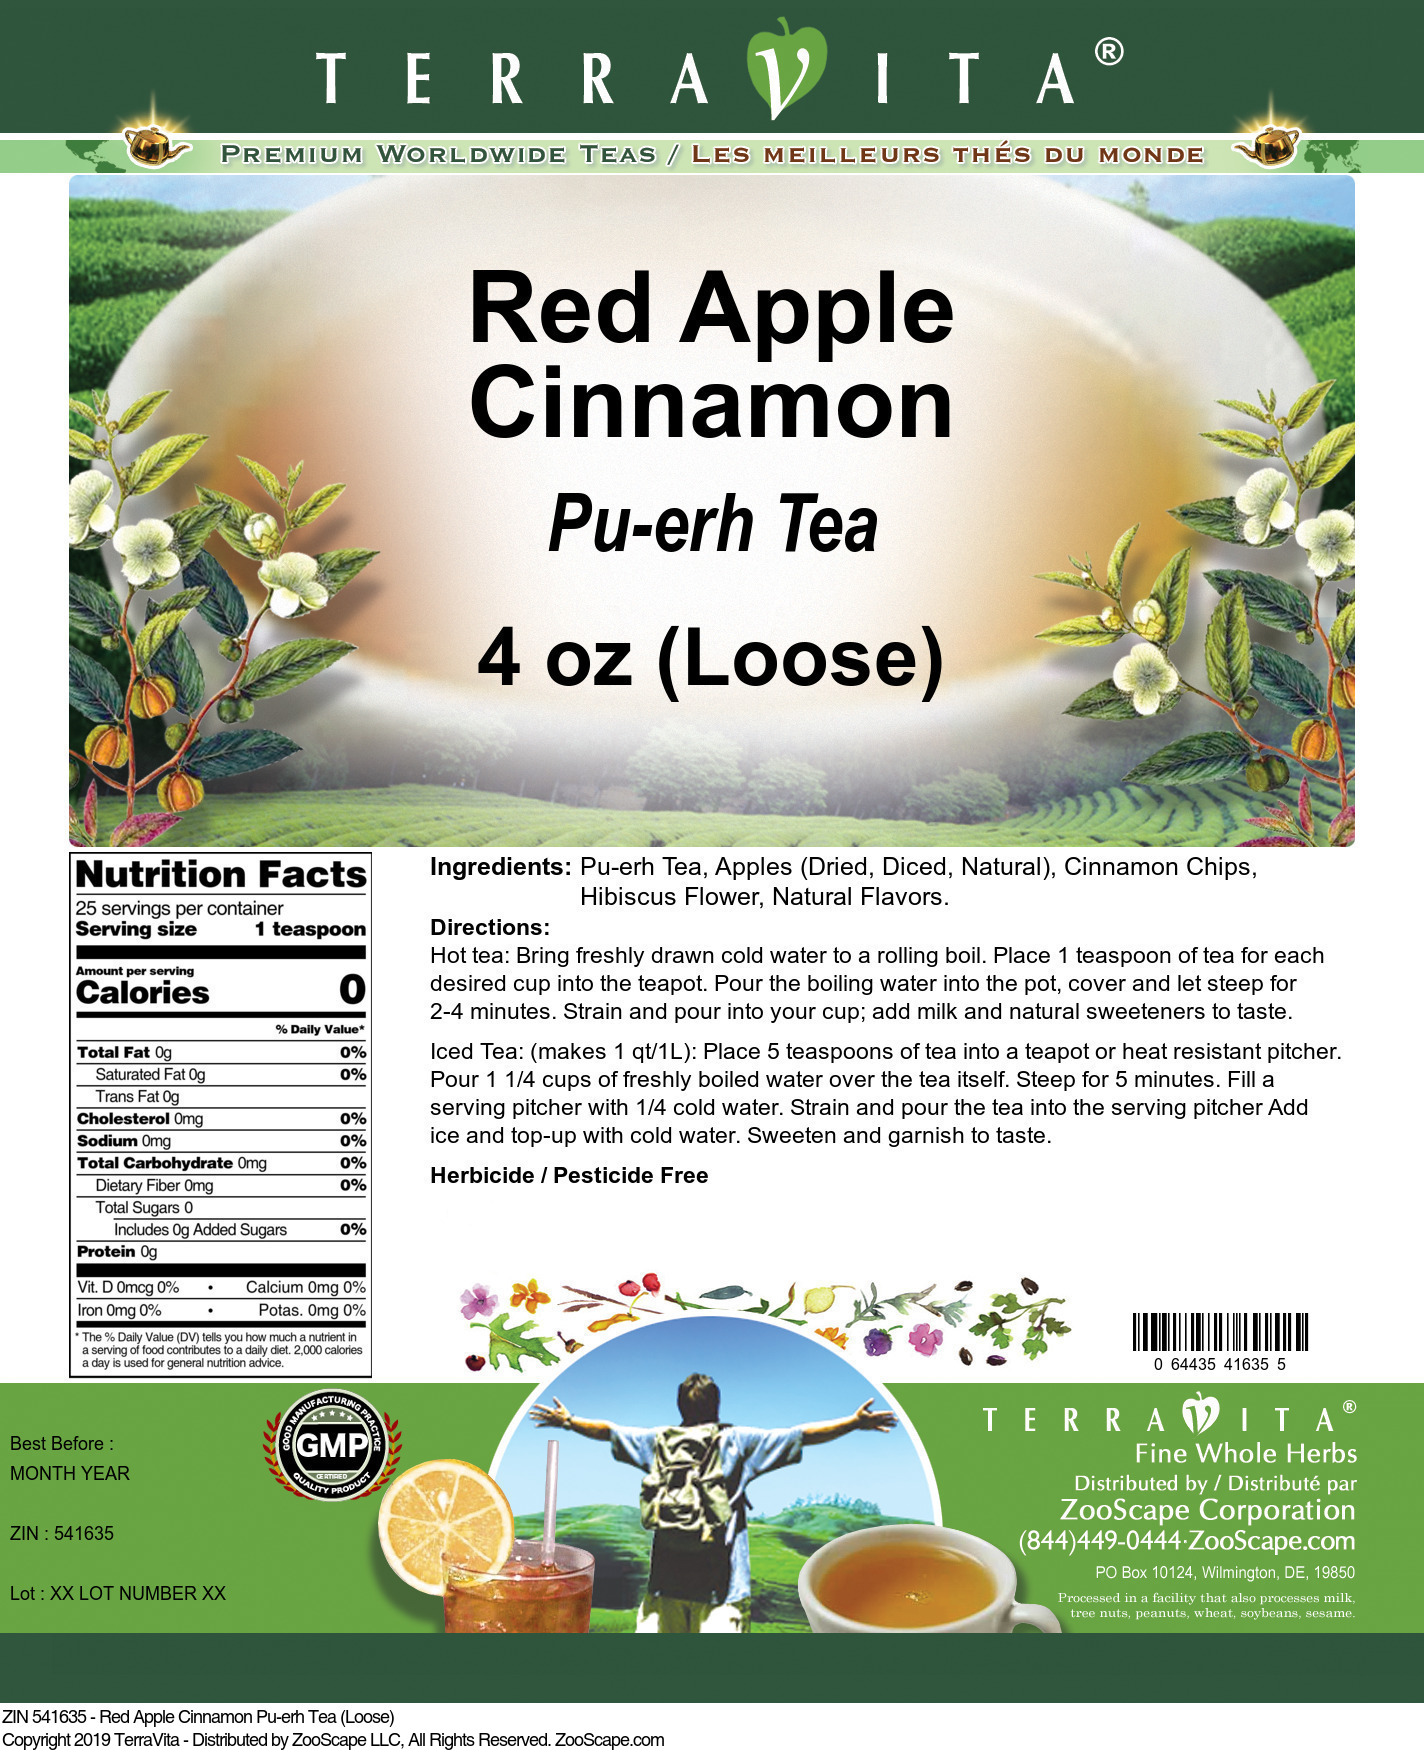 Red Apple Cinnamon Pu-erh Tea (Loose) - Label